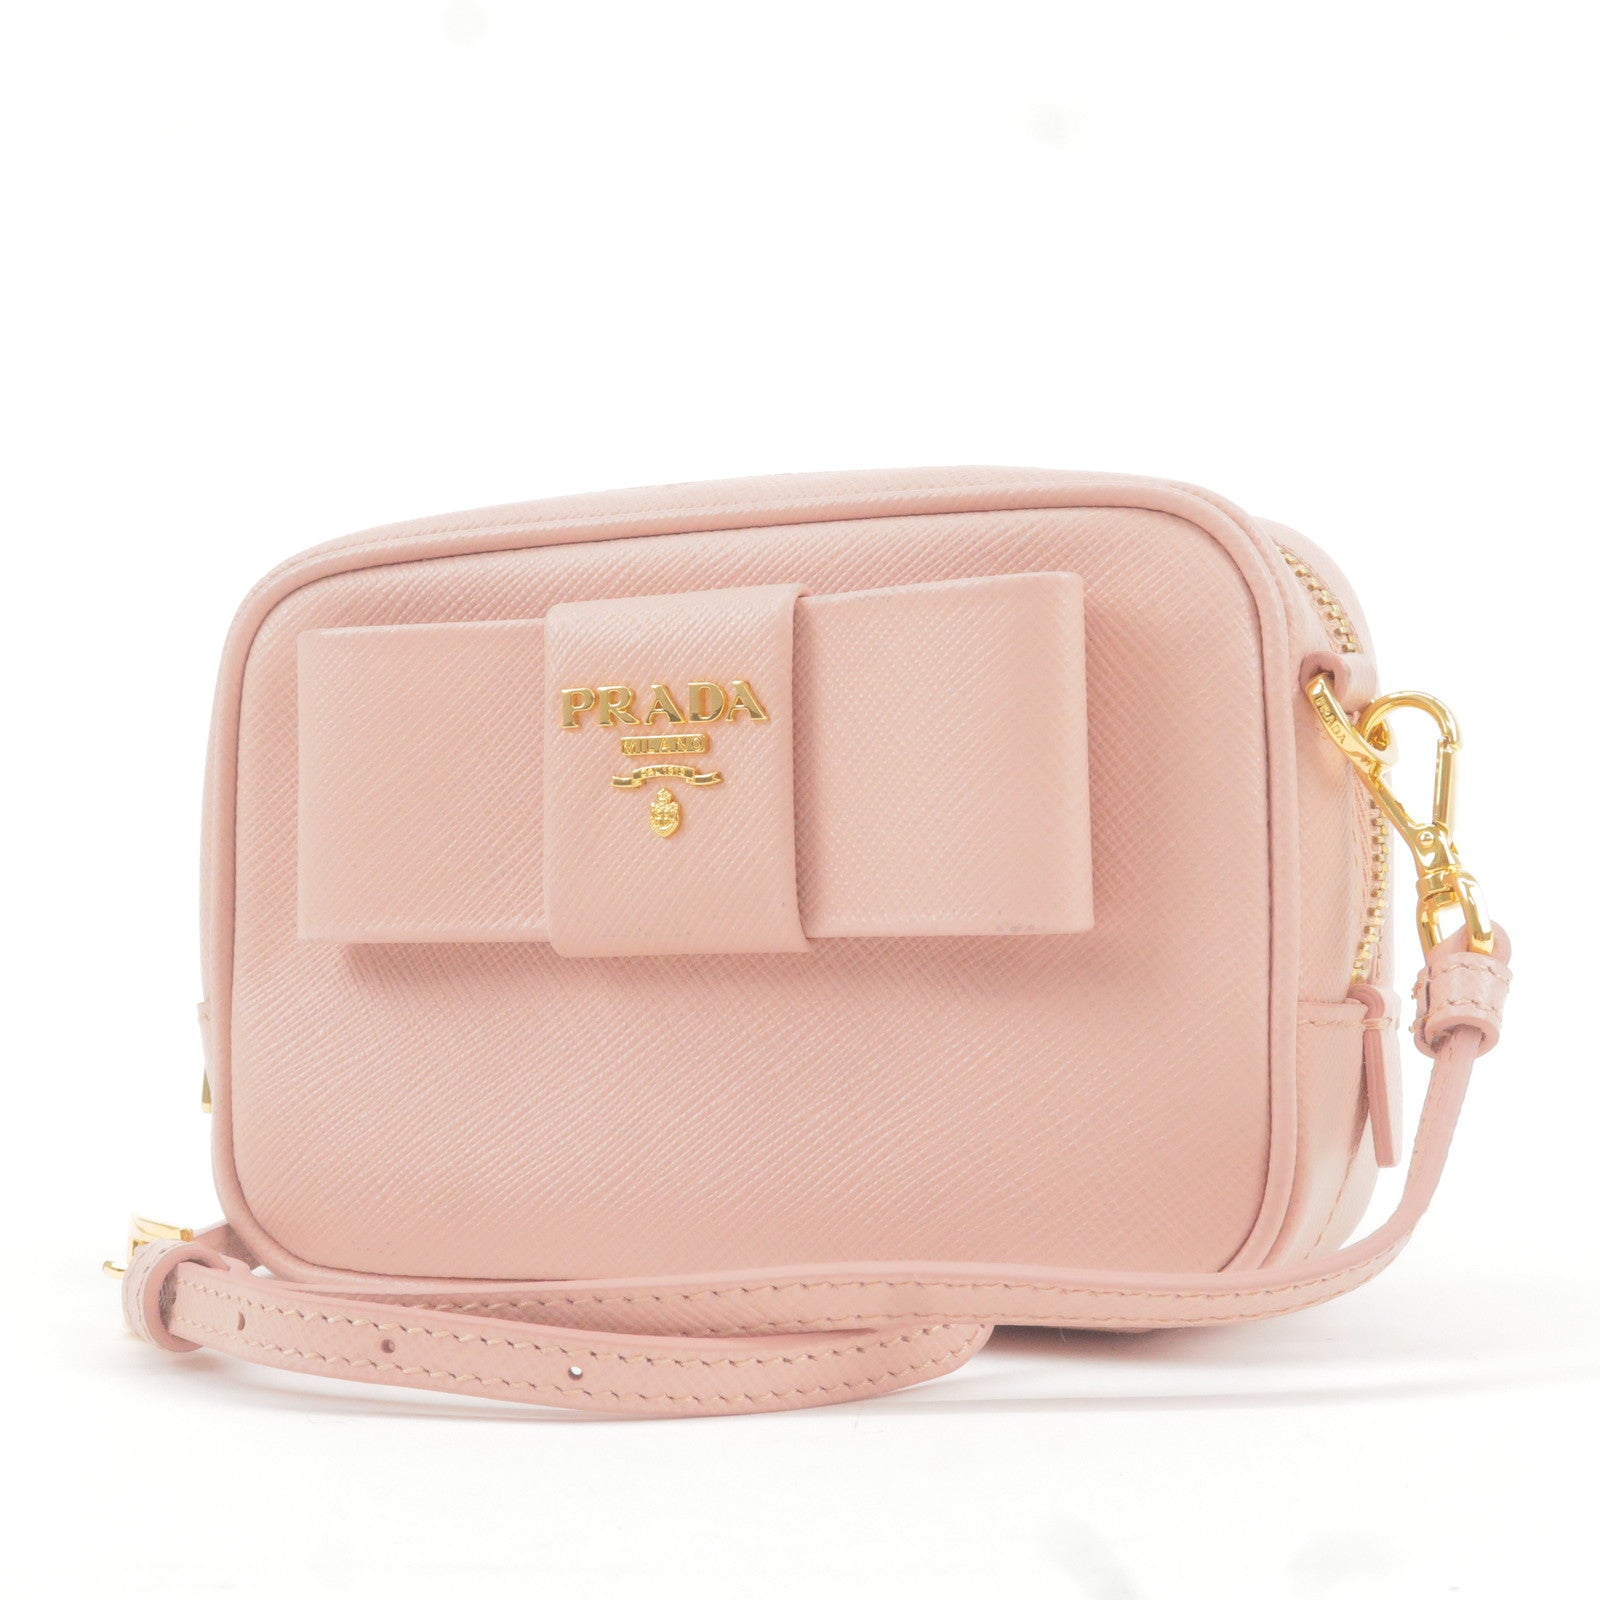 Prada pink alligator skin purse | Alligator skin, Purses, Pink